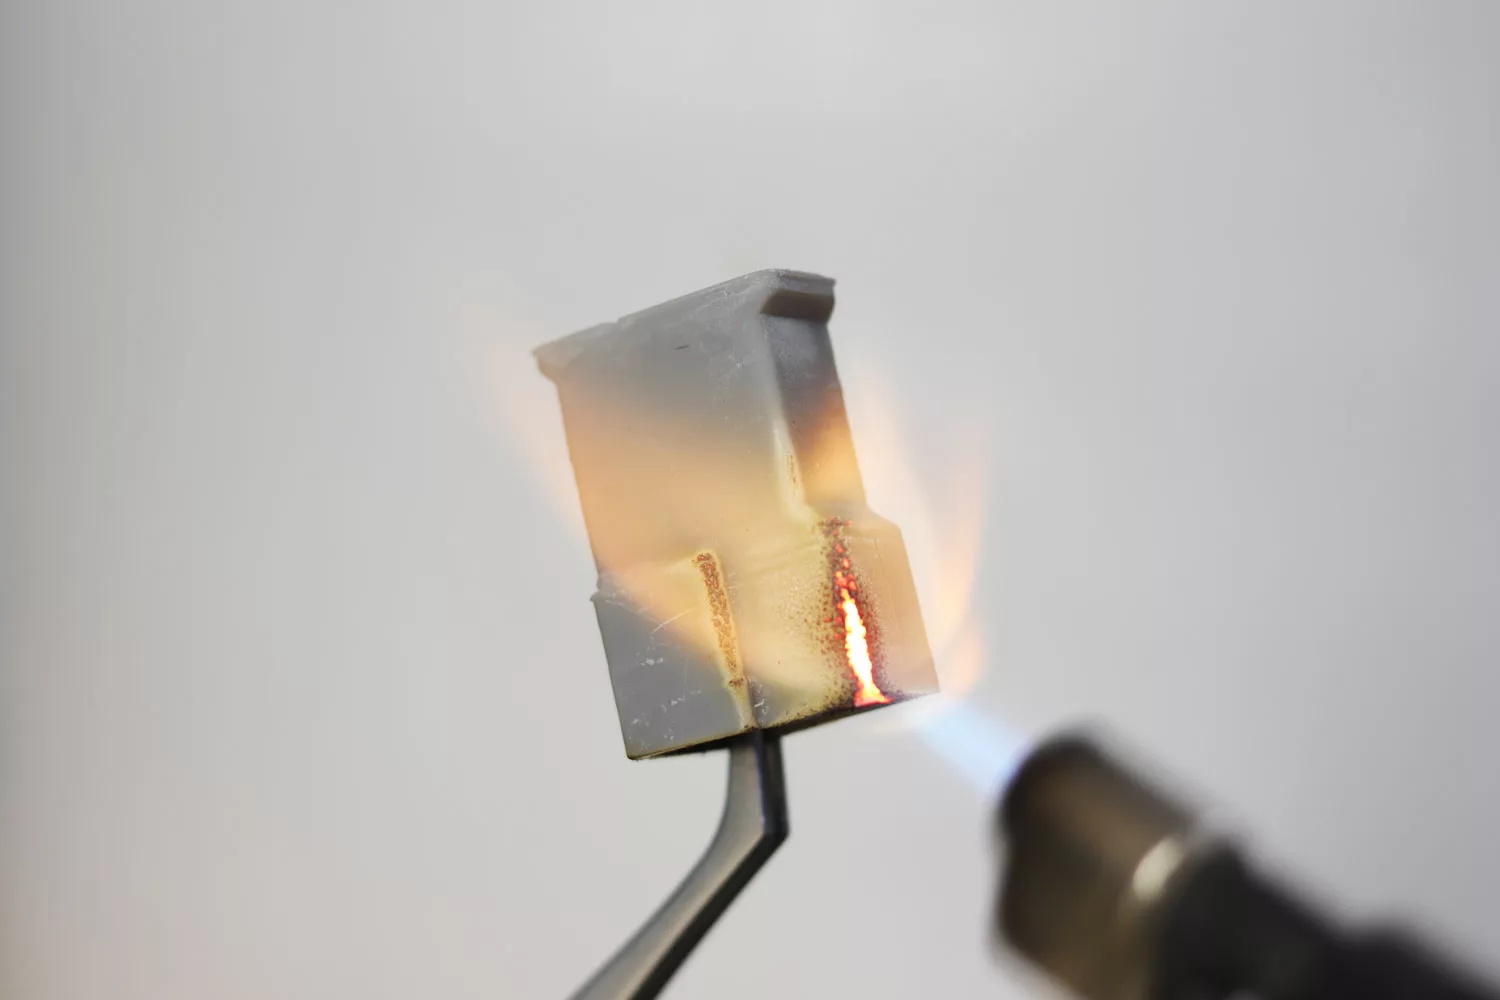 Flame Retardant 3D printed object